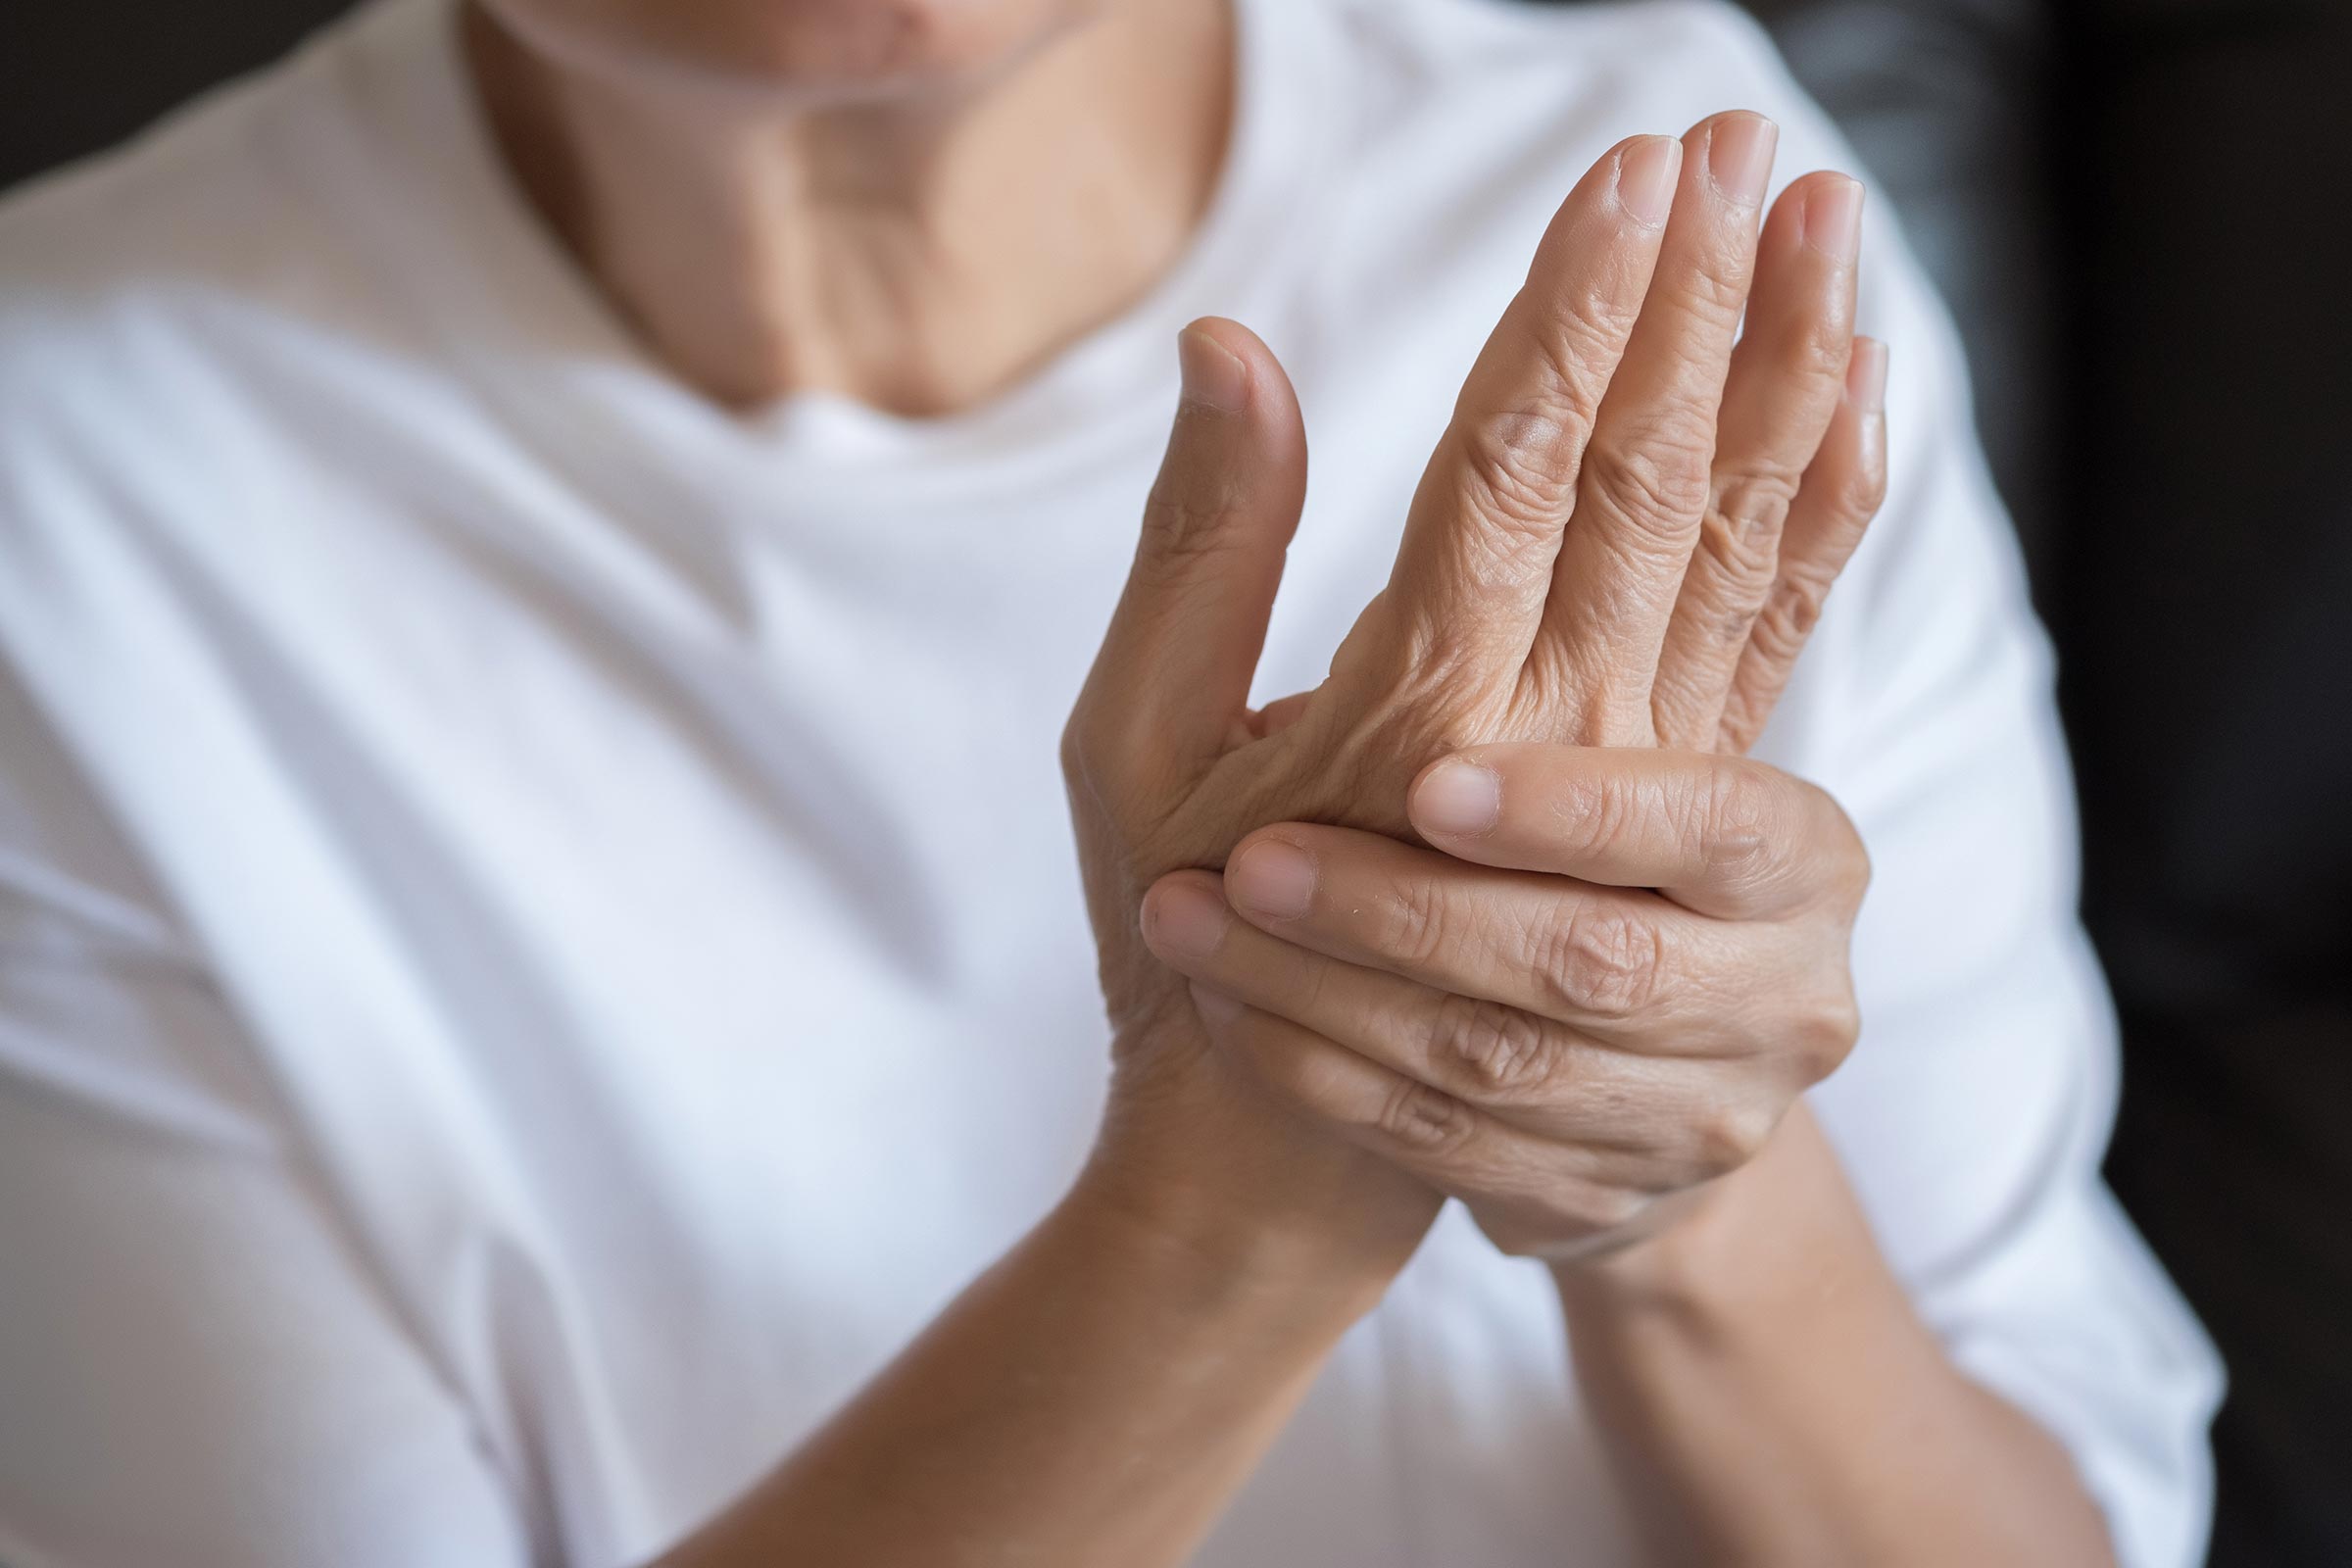 RVNAhealth Arthritis in Hands, elder care programs